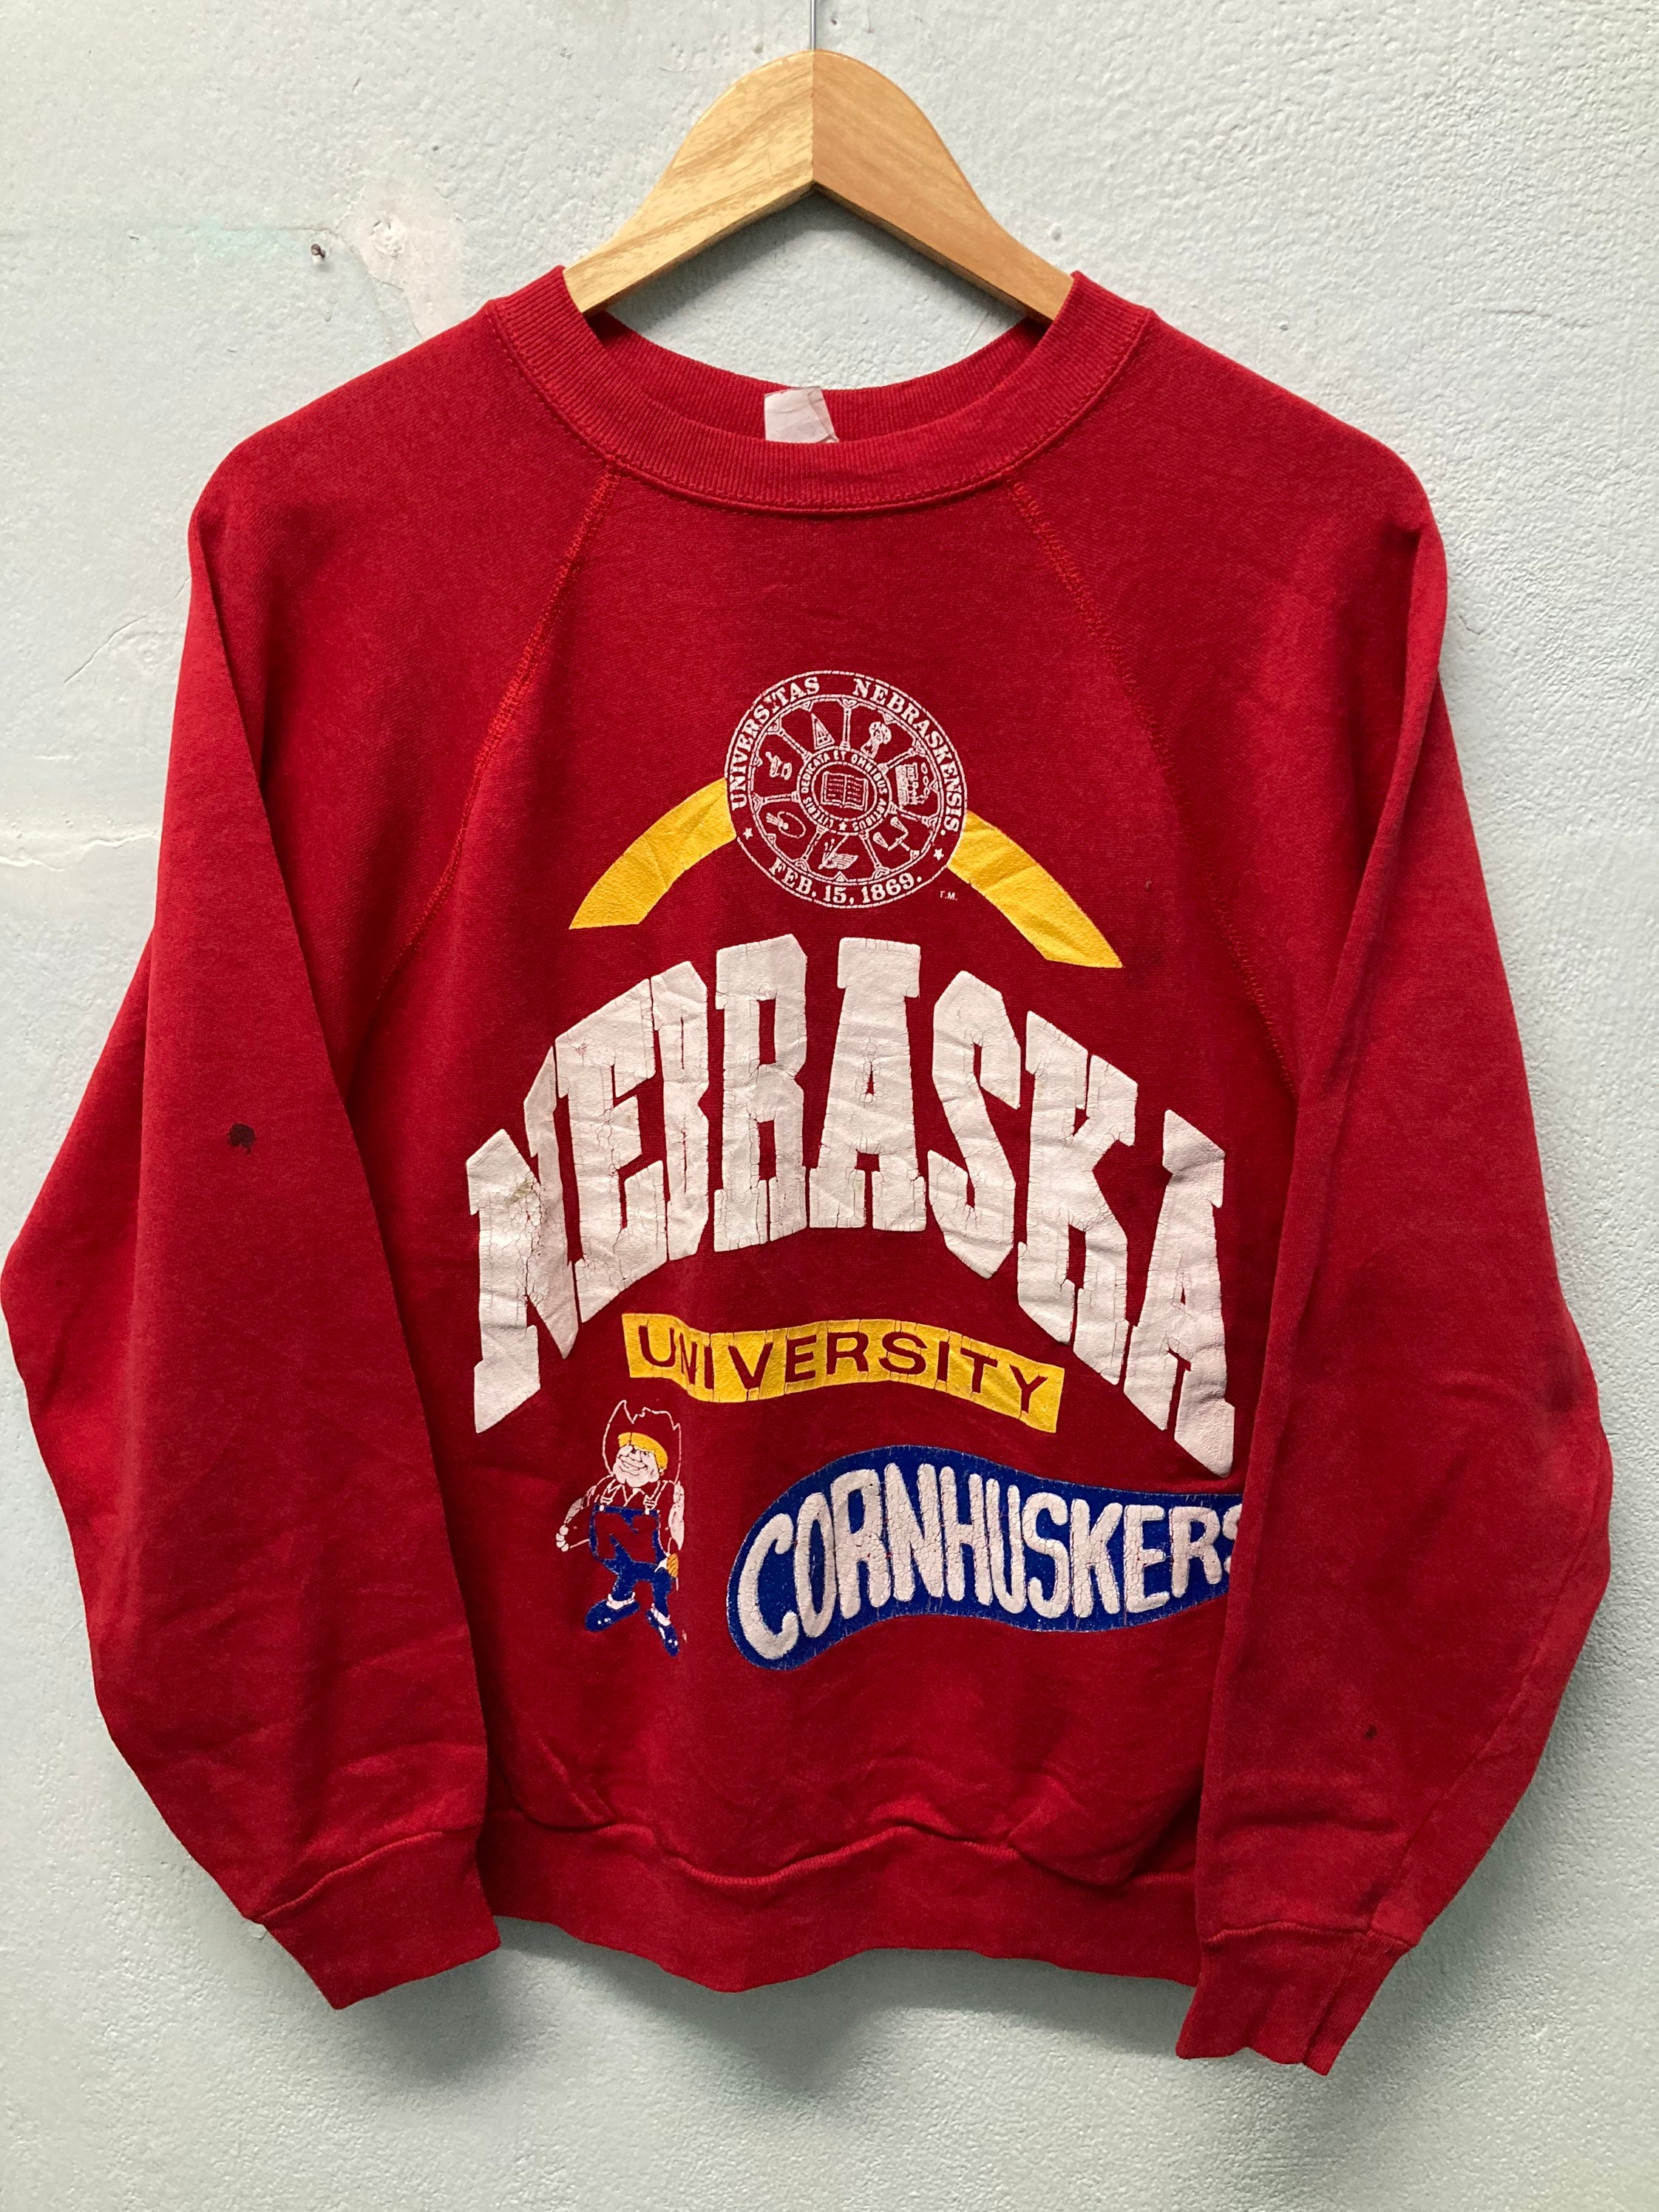 Vintage Nebraska Cornhusker University Sweater | Etsy